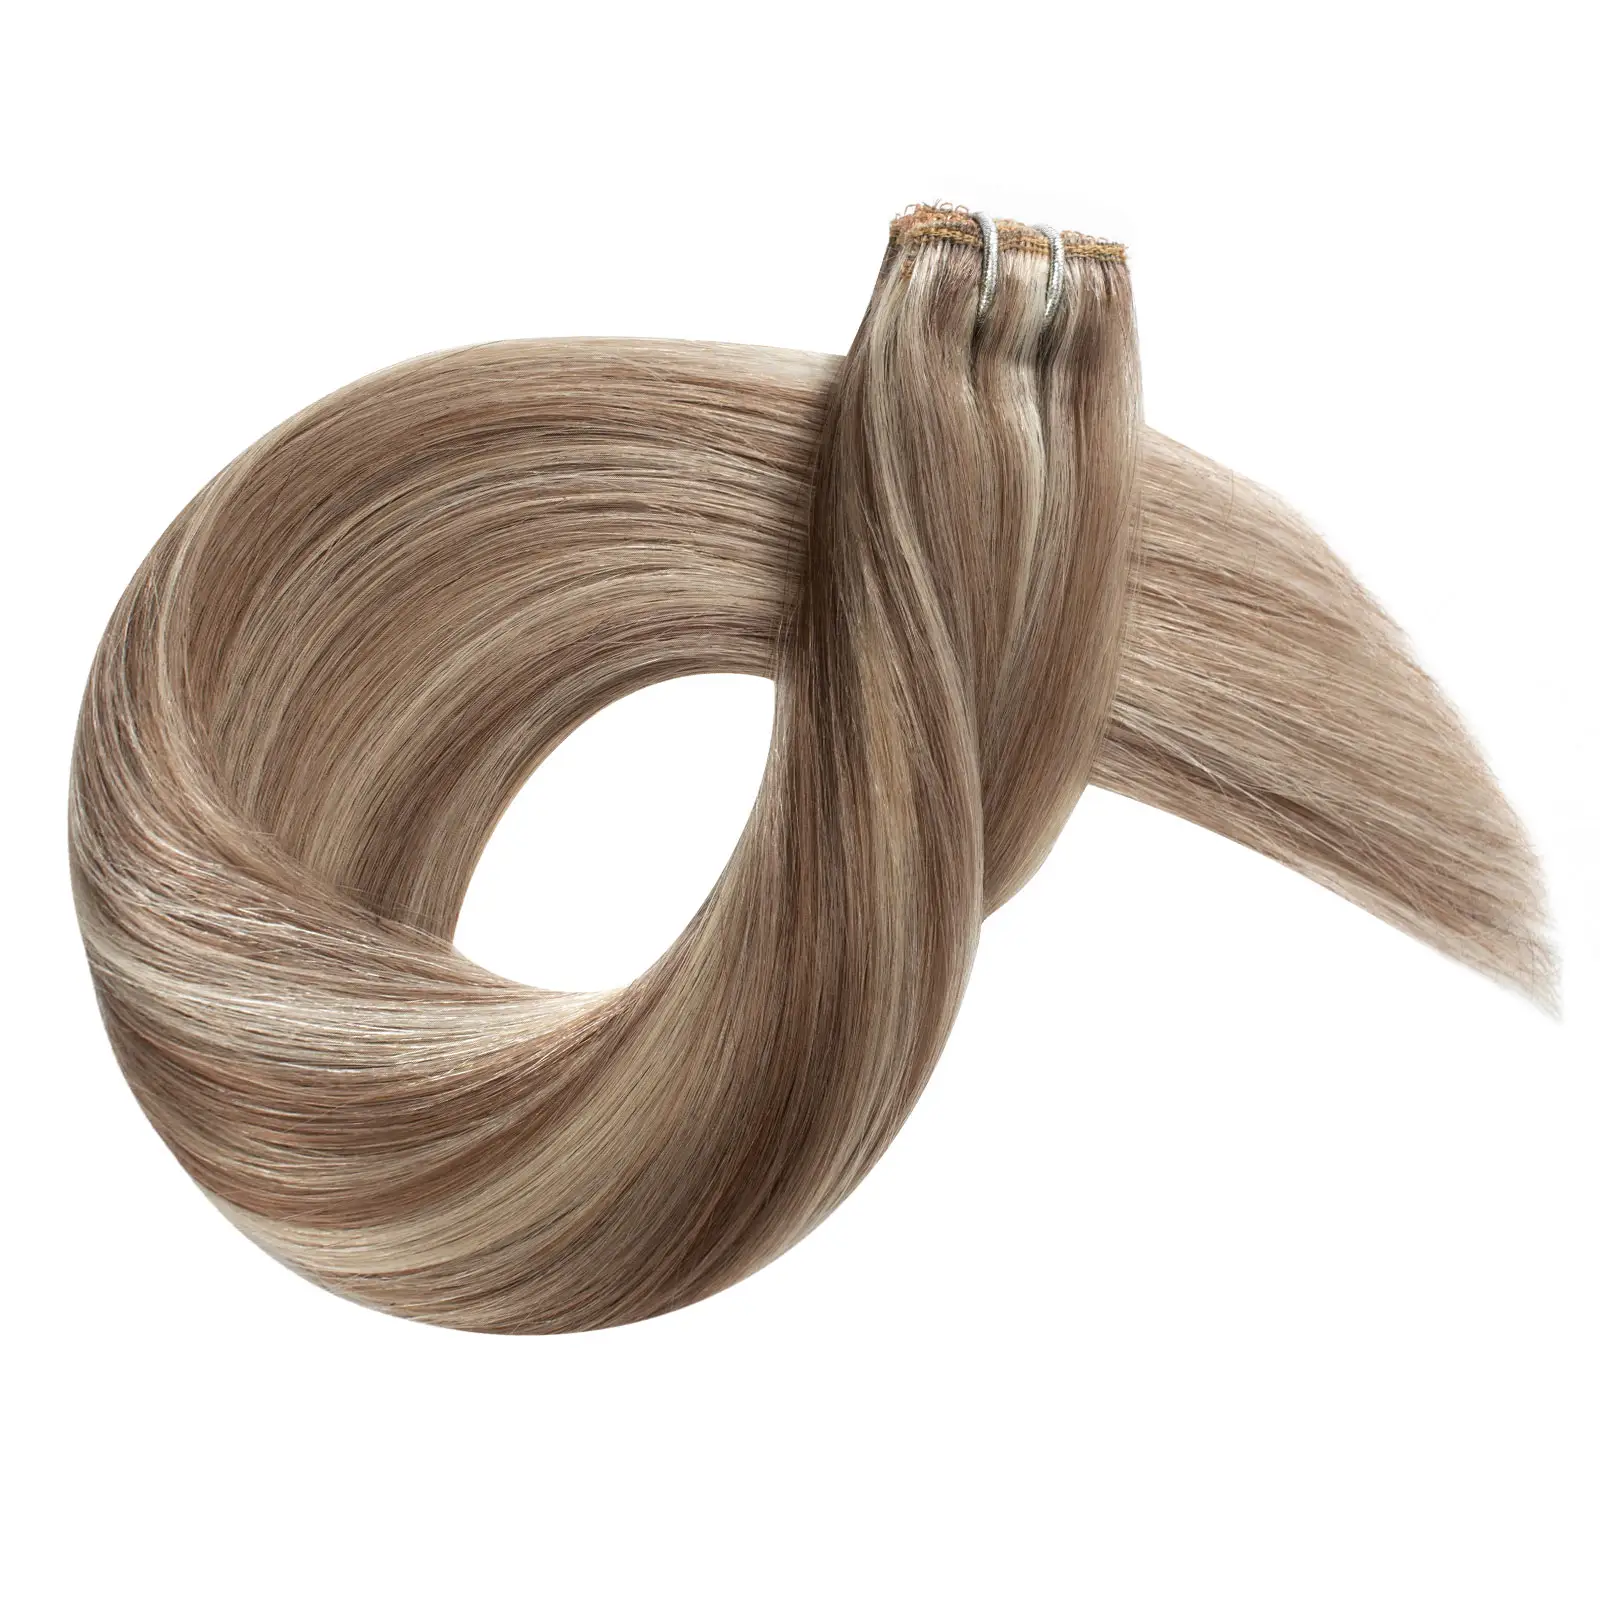 Precio barato Cabello europeo Doble dibujado 100% Remy Cabello humano 100g 120g 160g Clip de encaje en el cabello